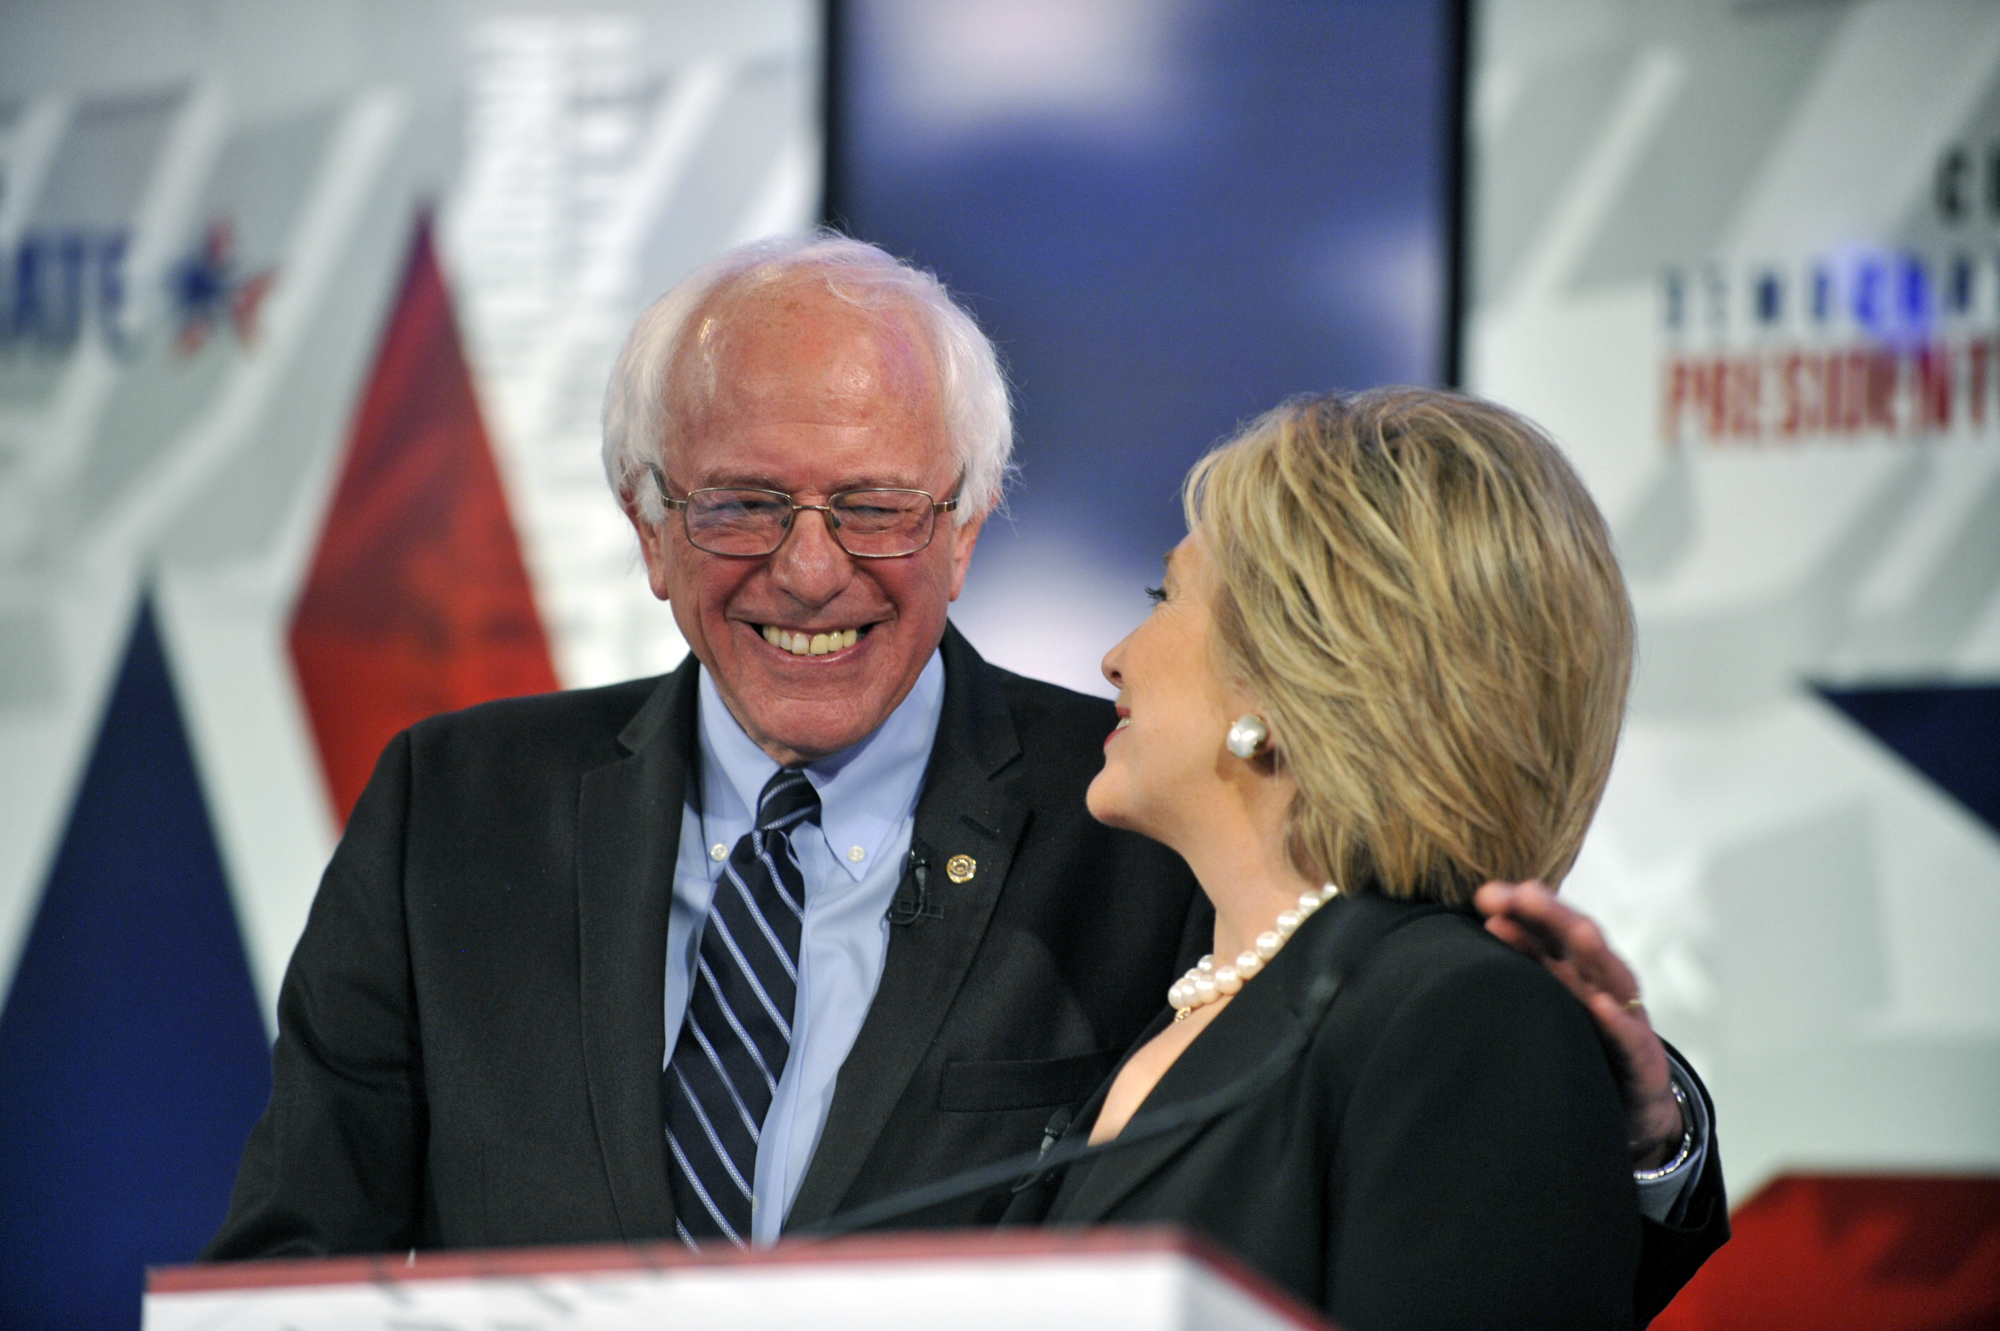 Sen. Bernie Sanders and Former U.S. Secretary of State Hillary Clinton at the Democratic Presidential Debate in Des Moines, Iowa on Nov. 14, 2015.